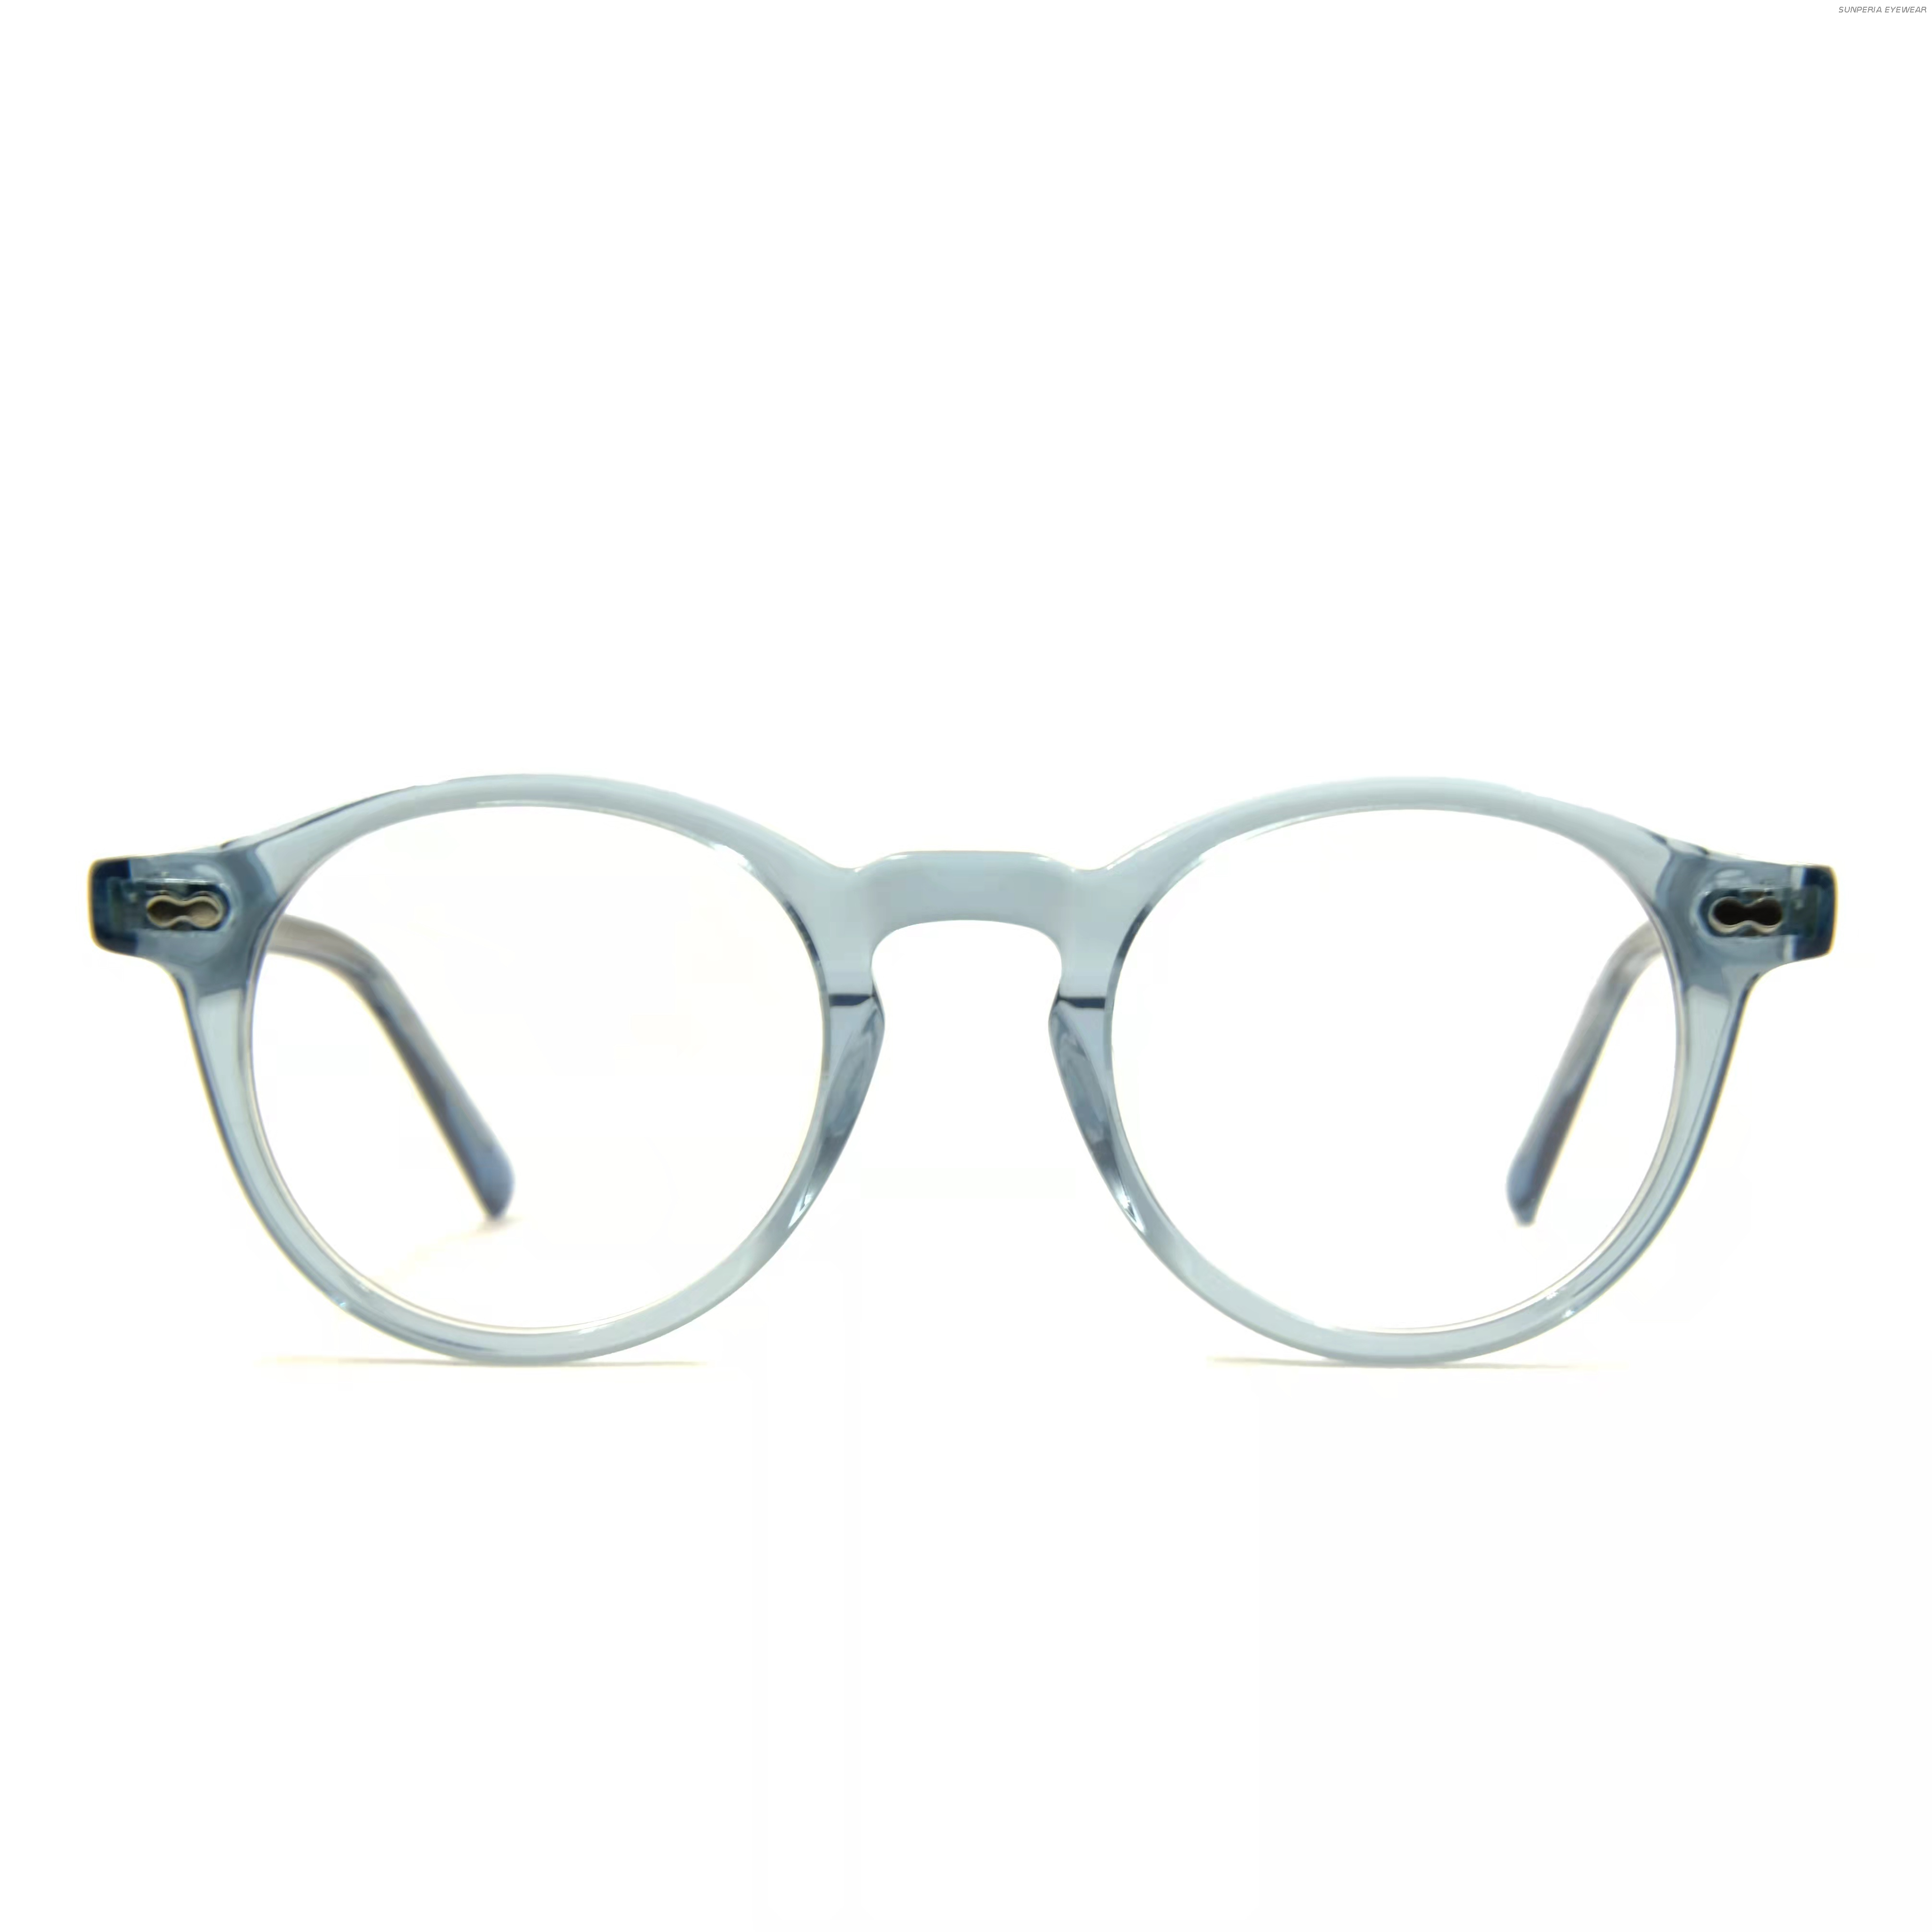 Monturas redondas de acetato Gafas verdes transparentes Fabricación de monturas ópticas Fabricantes de gafas personalizadas